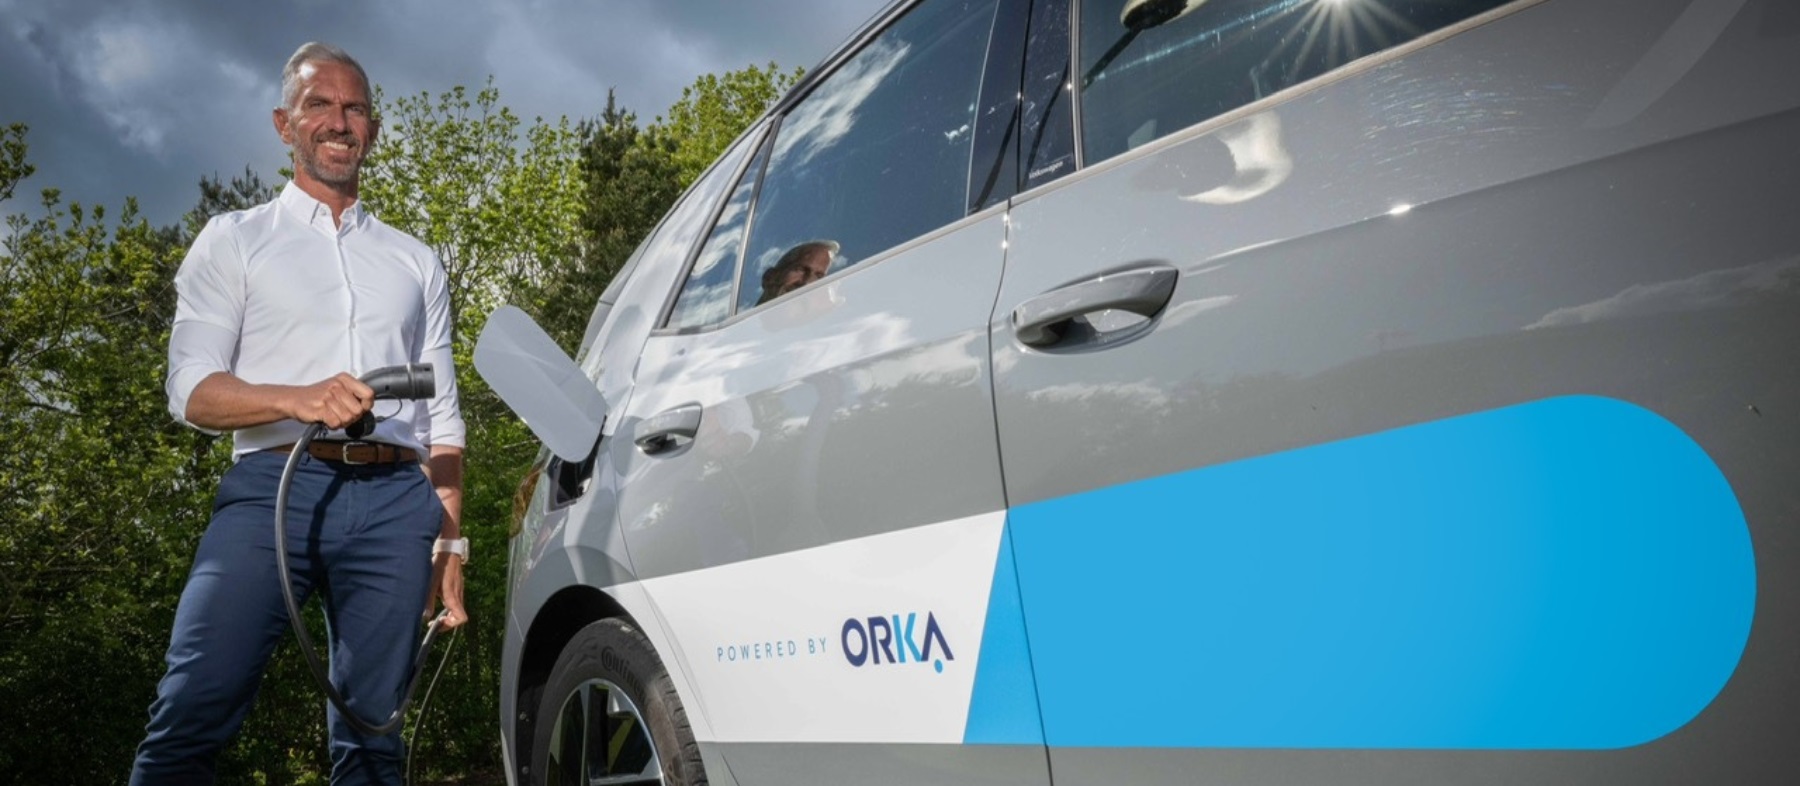 North-east Scotland’s innovative installer, ORKA, chooses Fuuse platform for charge points